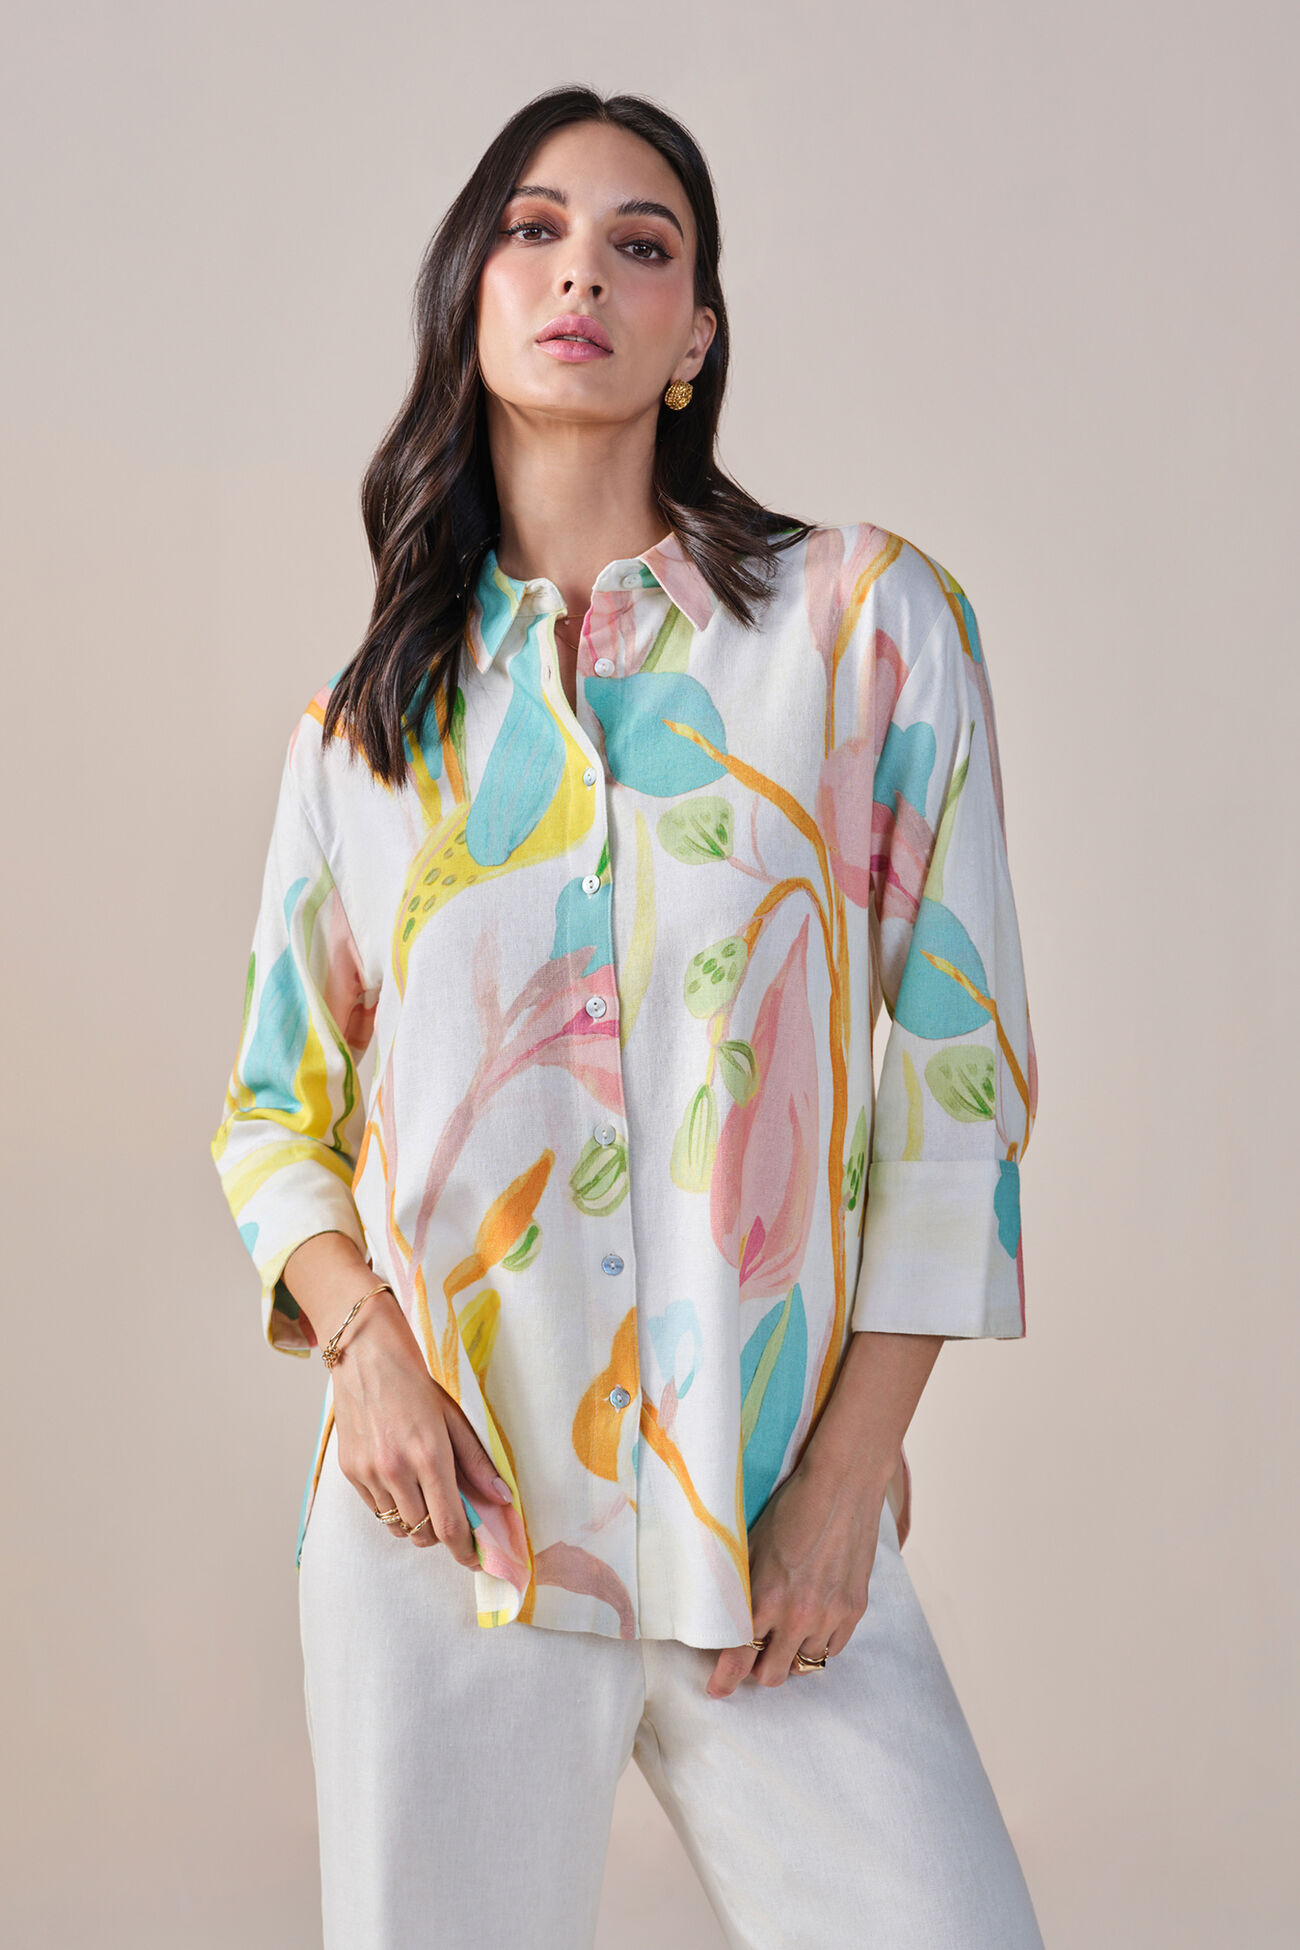 A Floral Summer Viscose Linen Blend Shirt, Multi Color, image 1